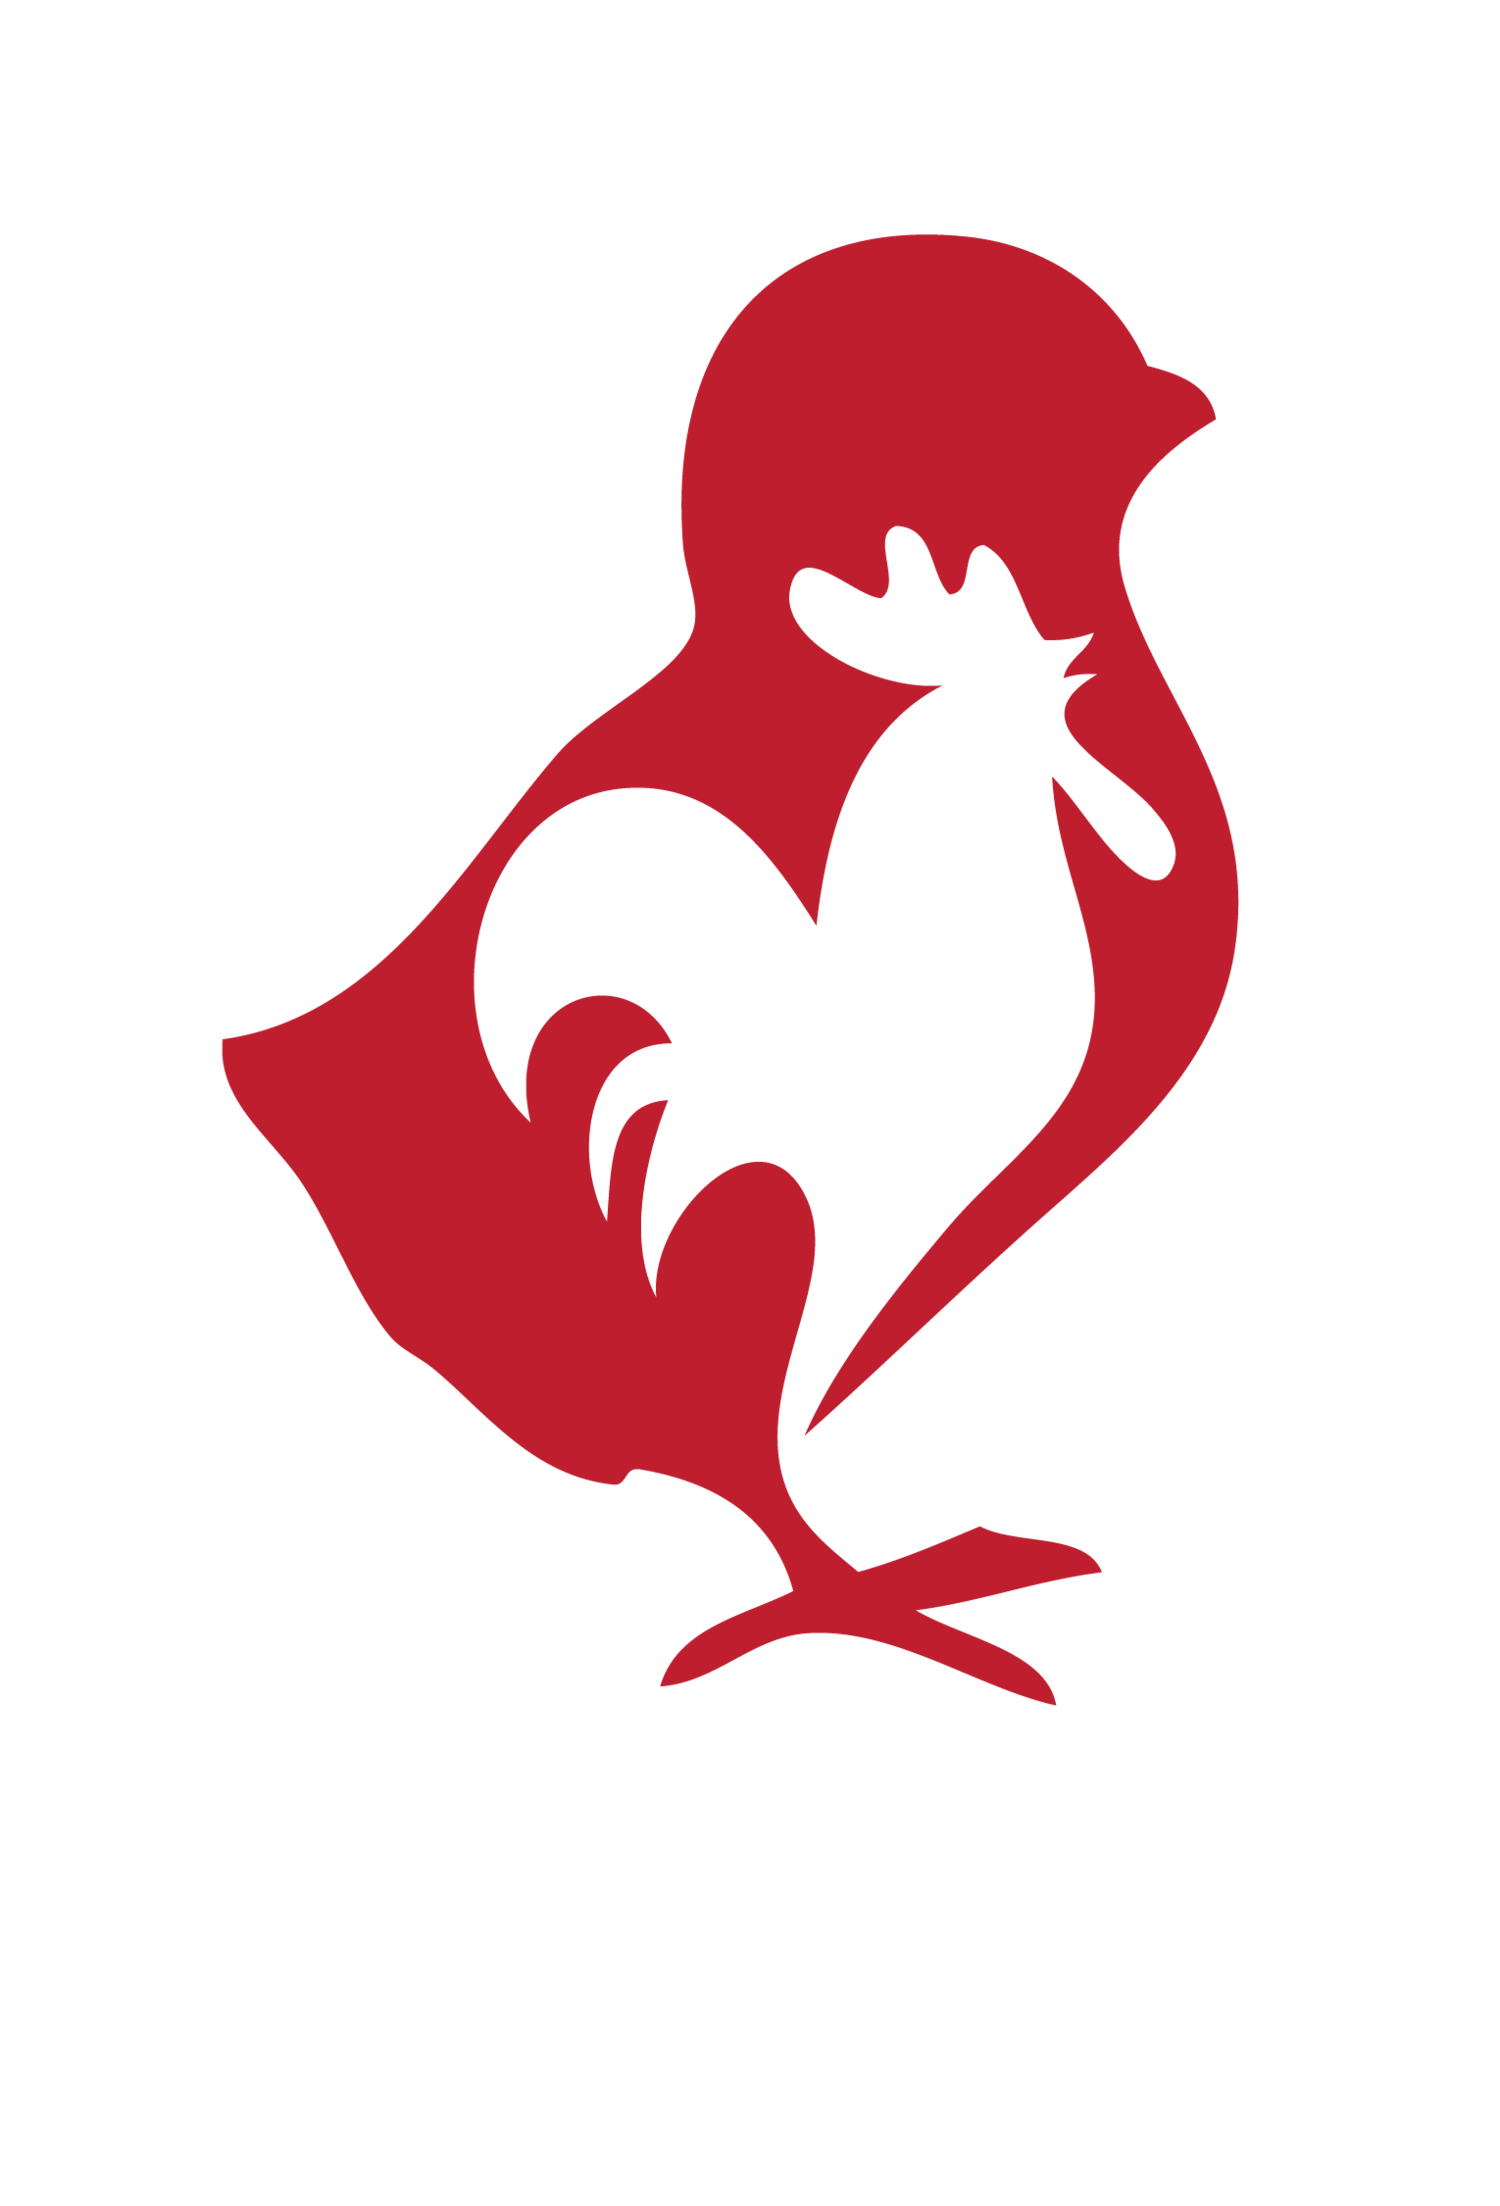 BRUNO PRESS